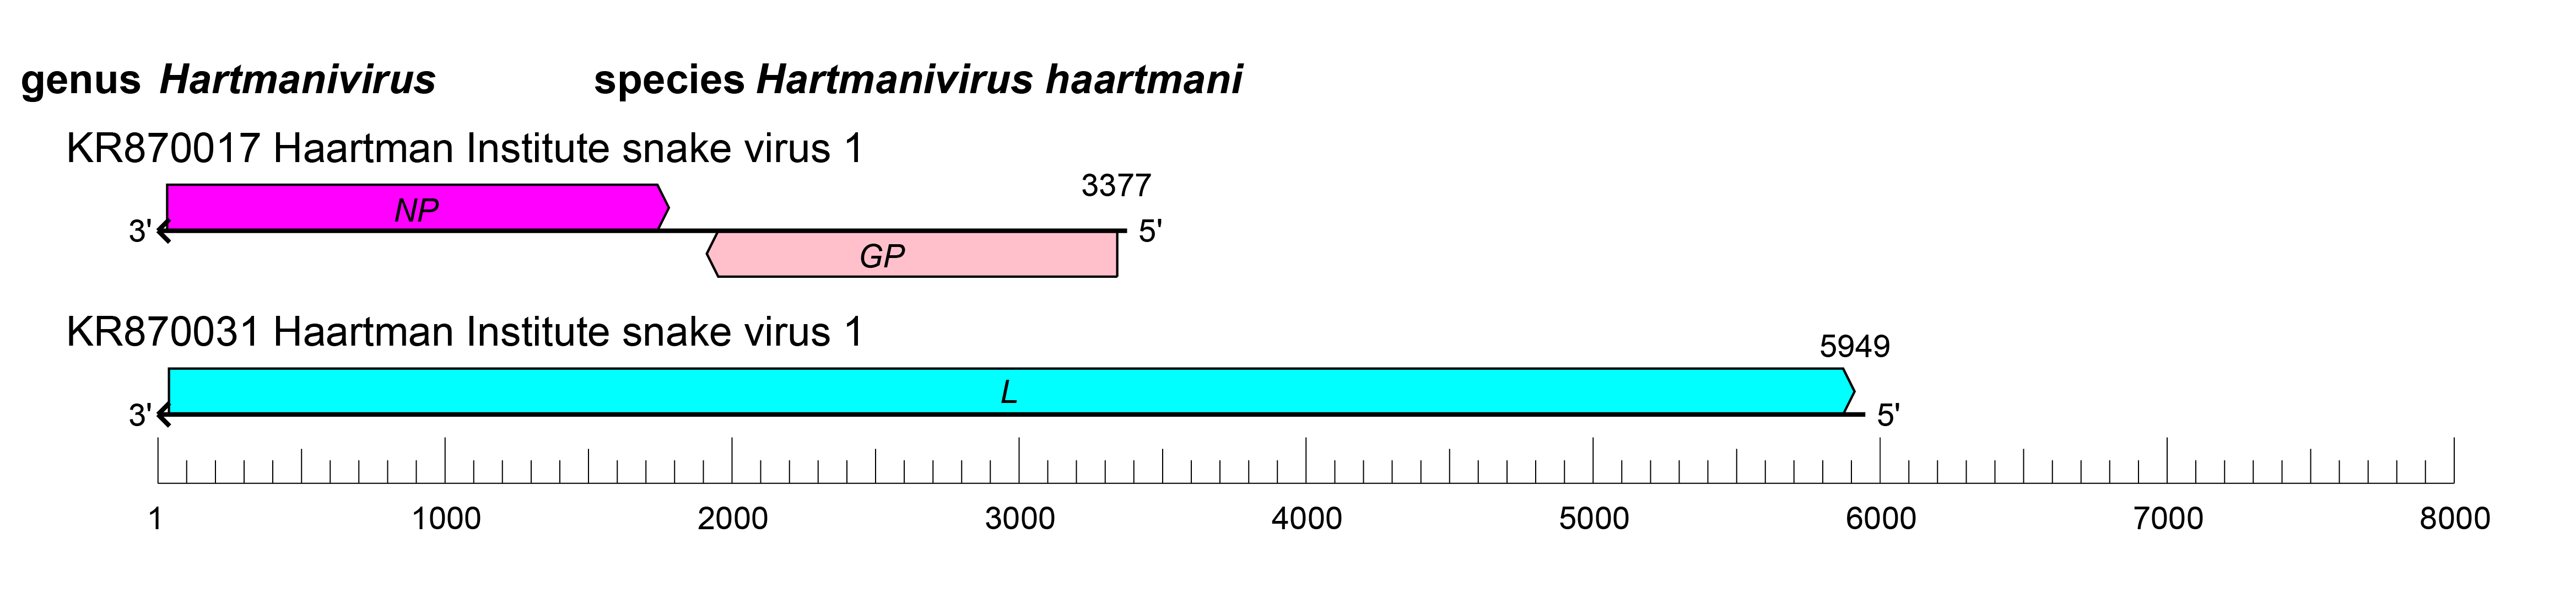 Hartmanivirus genome orgainsation